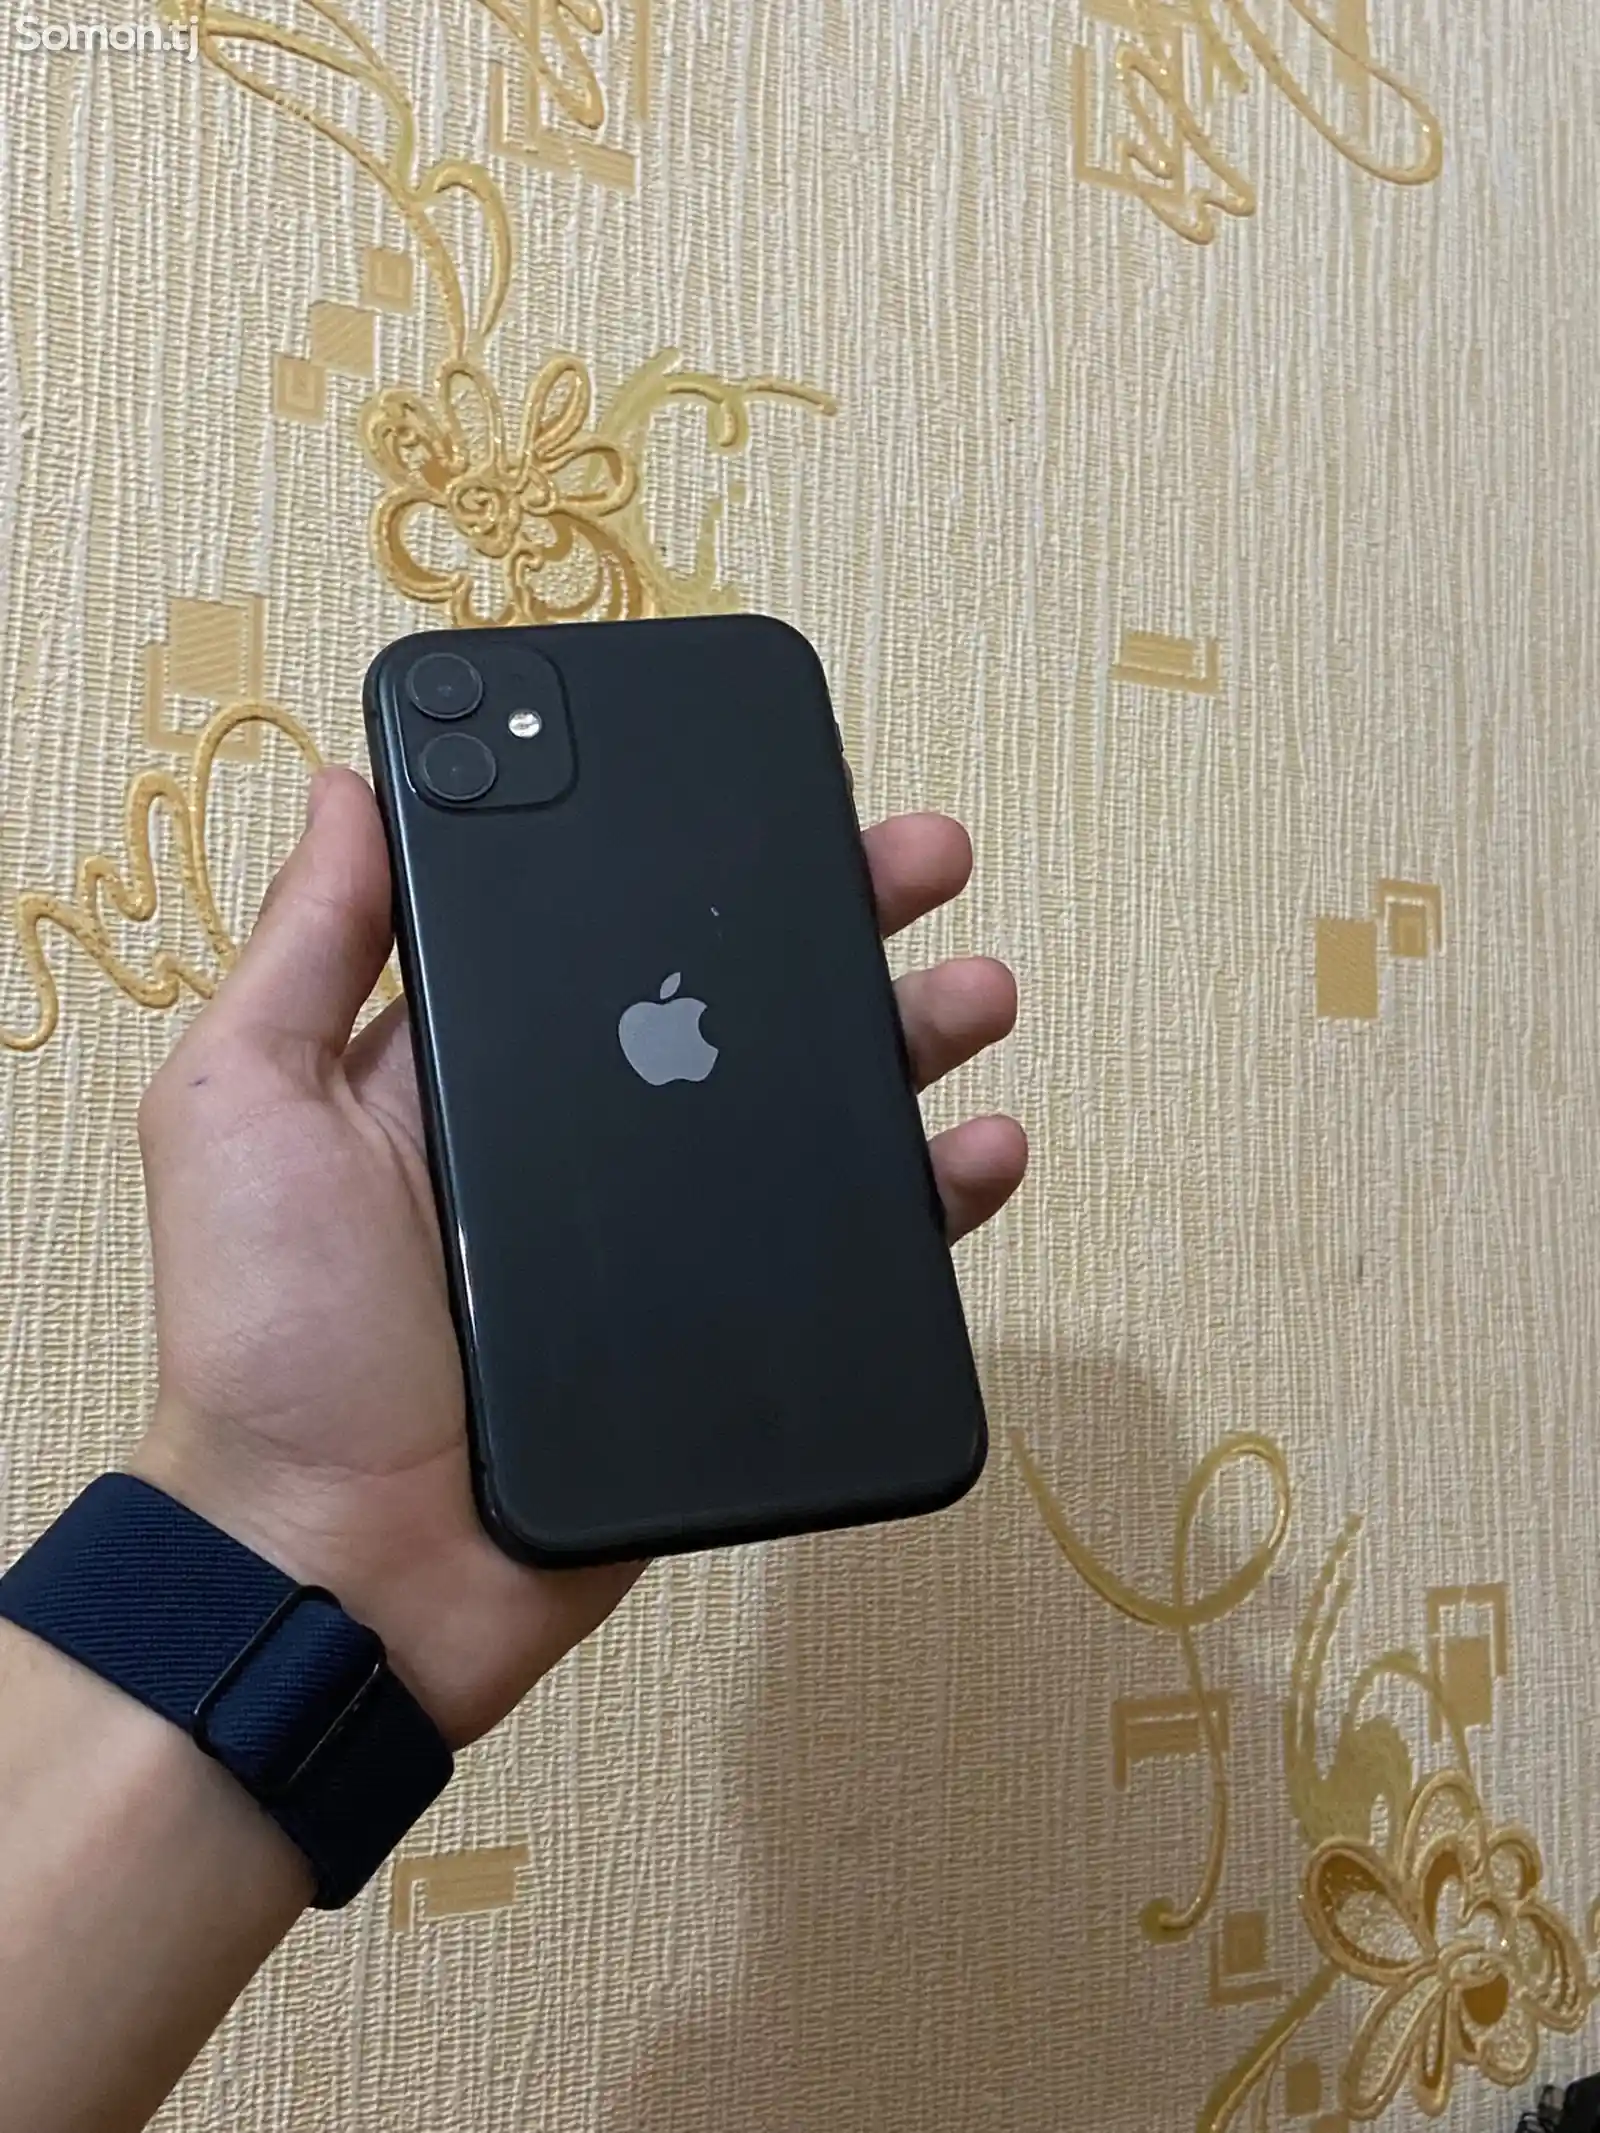 Apple iPhone 11, 128 gb, Black-1